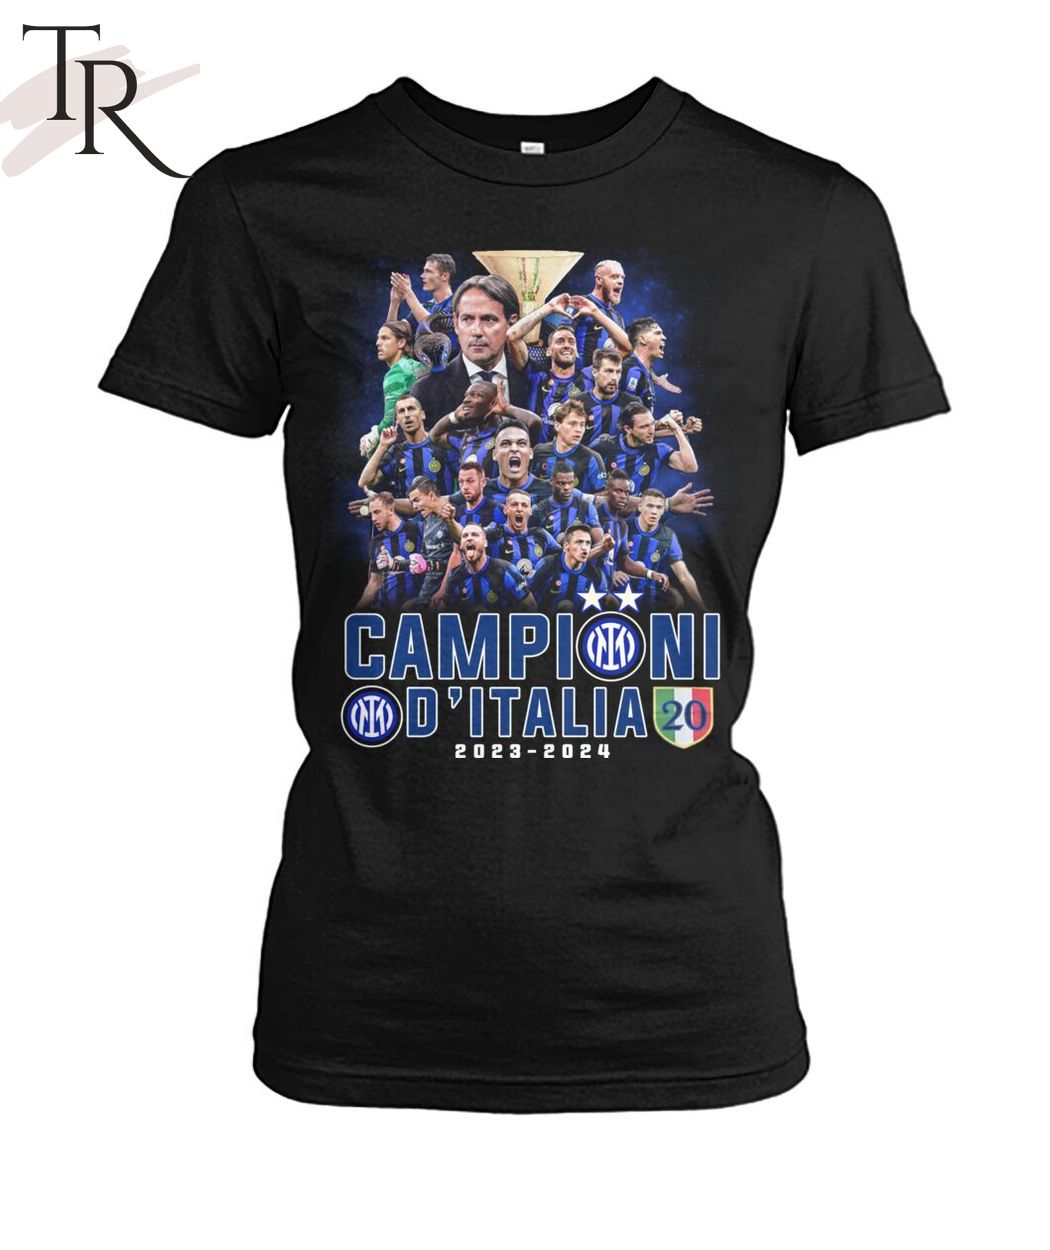 Inter Milan Campioni D'Italia 2023-2024 T-Shirt